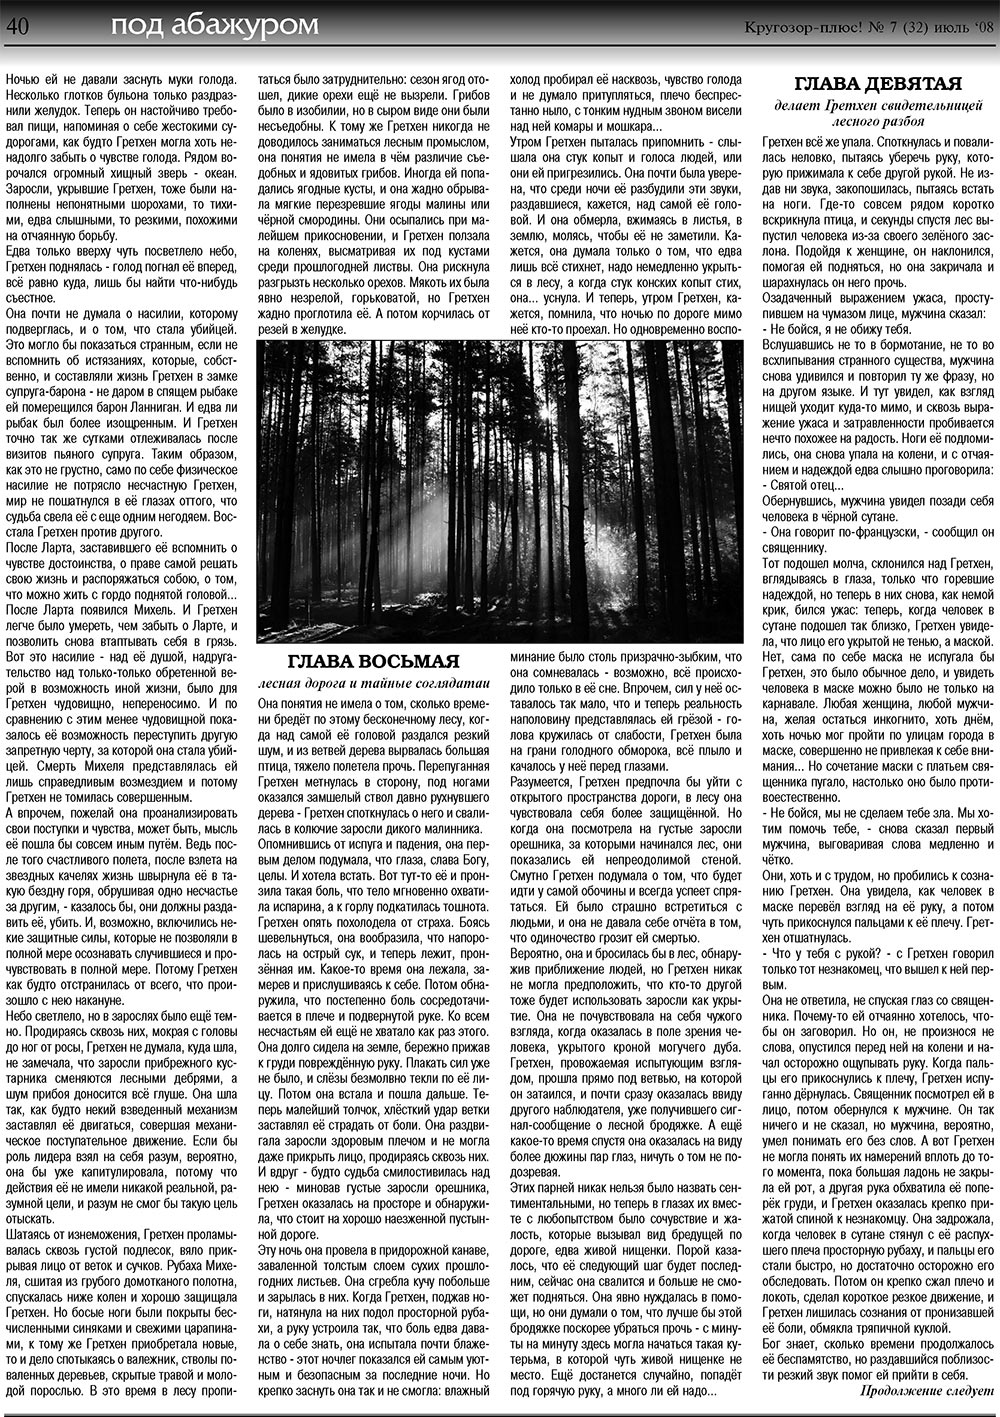 Кругозор плюс! (газета). 2008 год, номер 7, стр. 40